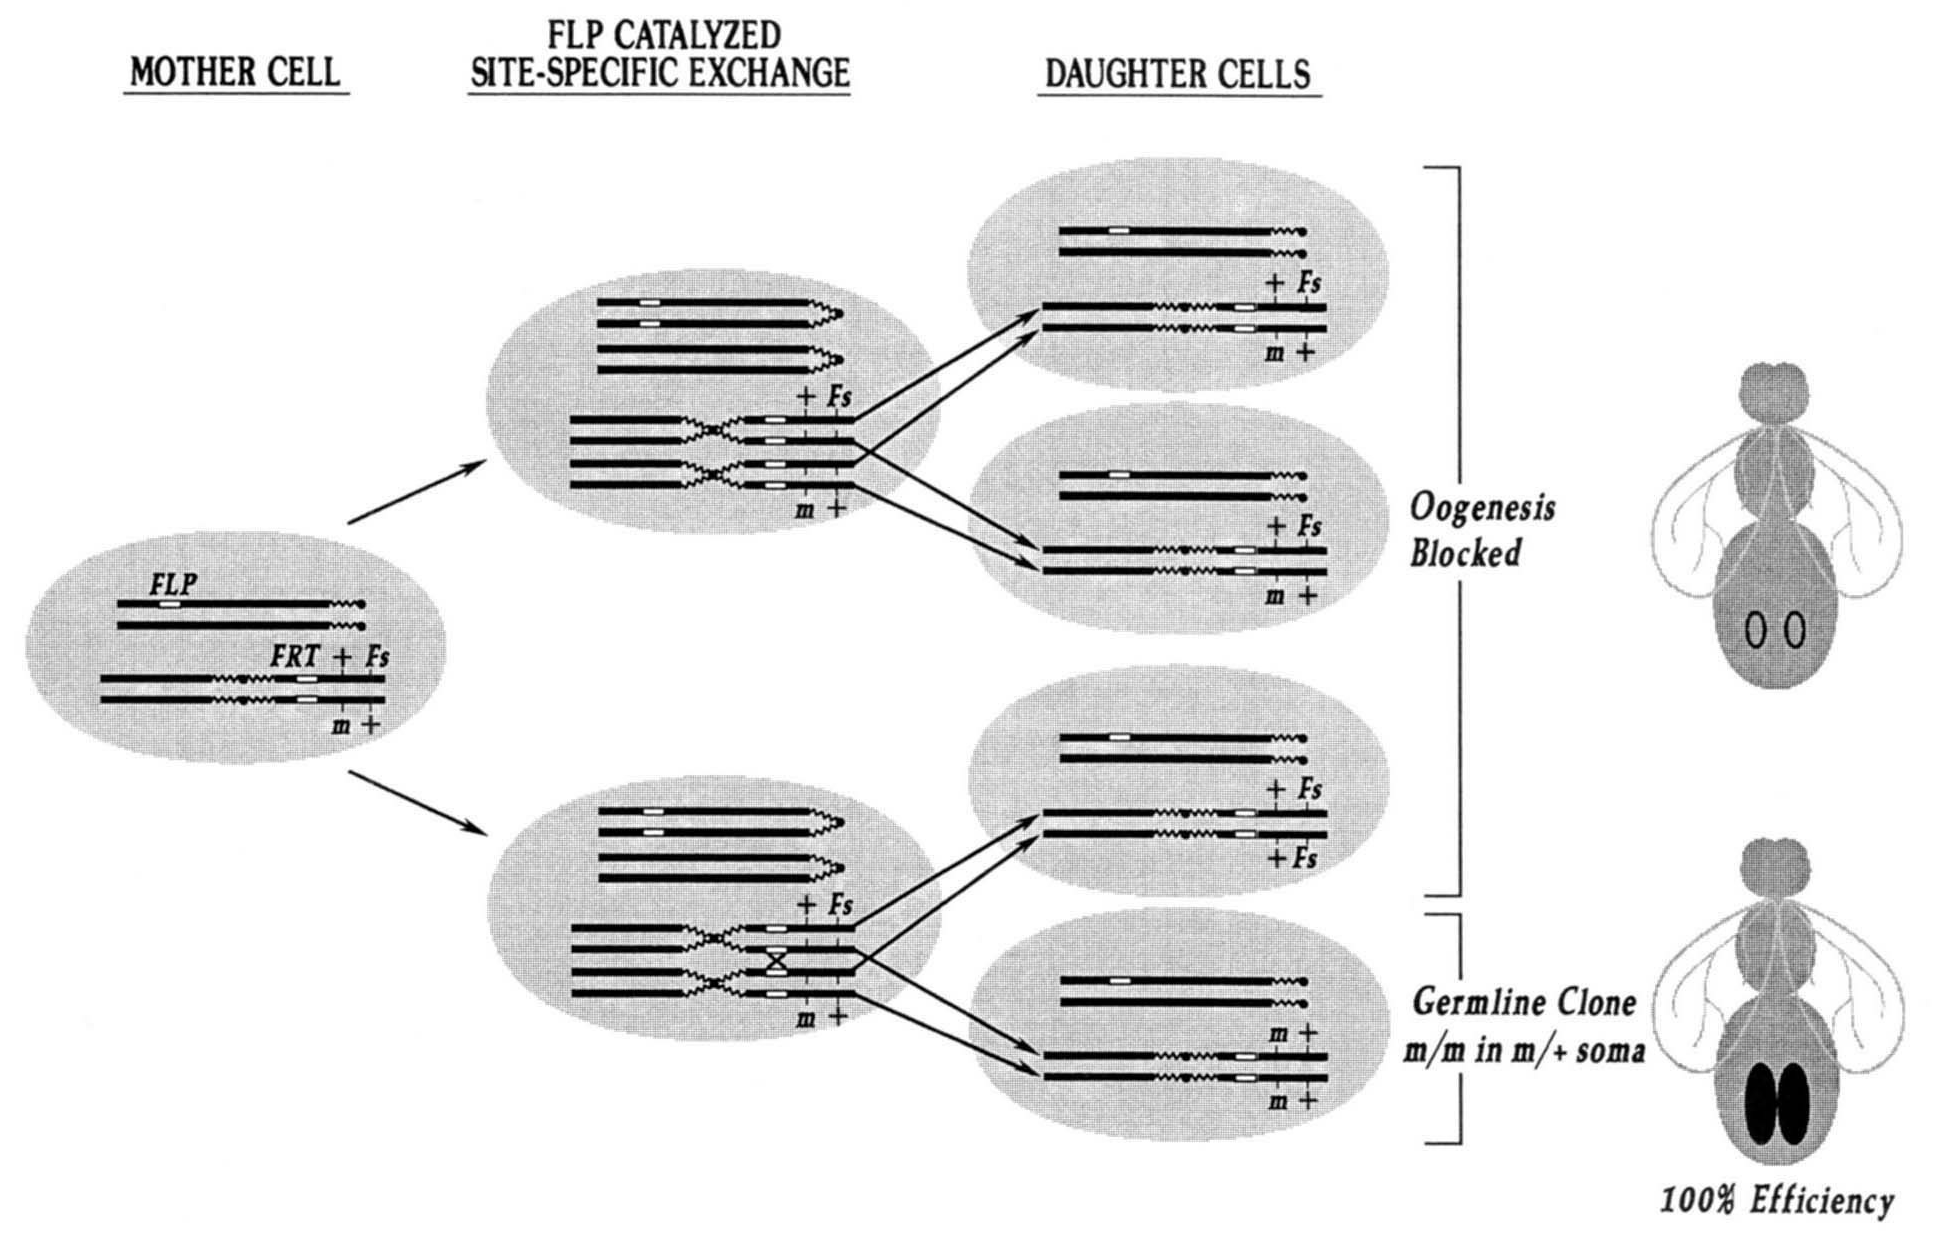 Dominant Female Sterile illustration originating in Chou & Perrimon (1996). The autosomal FLP-DFS technique for generating germline mosaics in Drosophila melanogaster. Genetics 144: 1673-1679